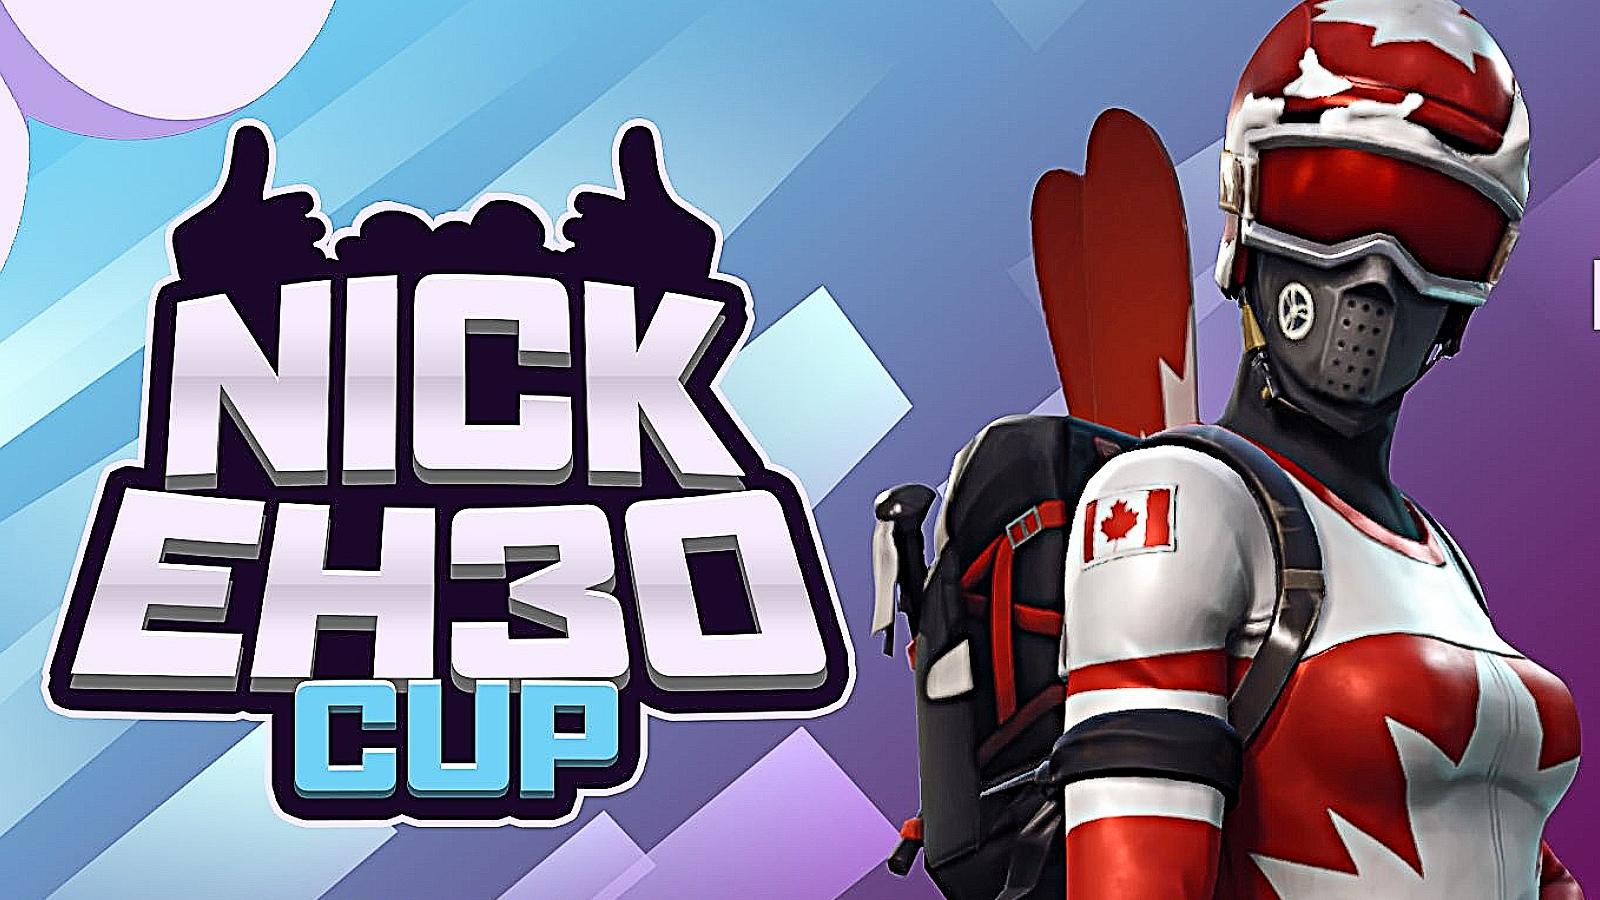 Fortnite NickEh30 $10k cup